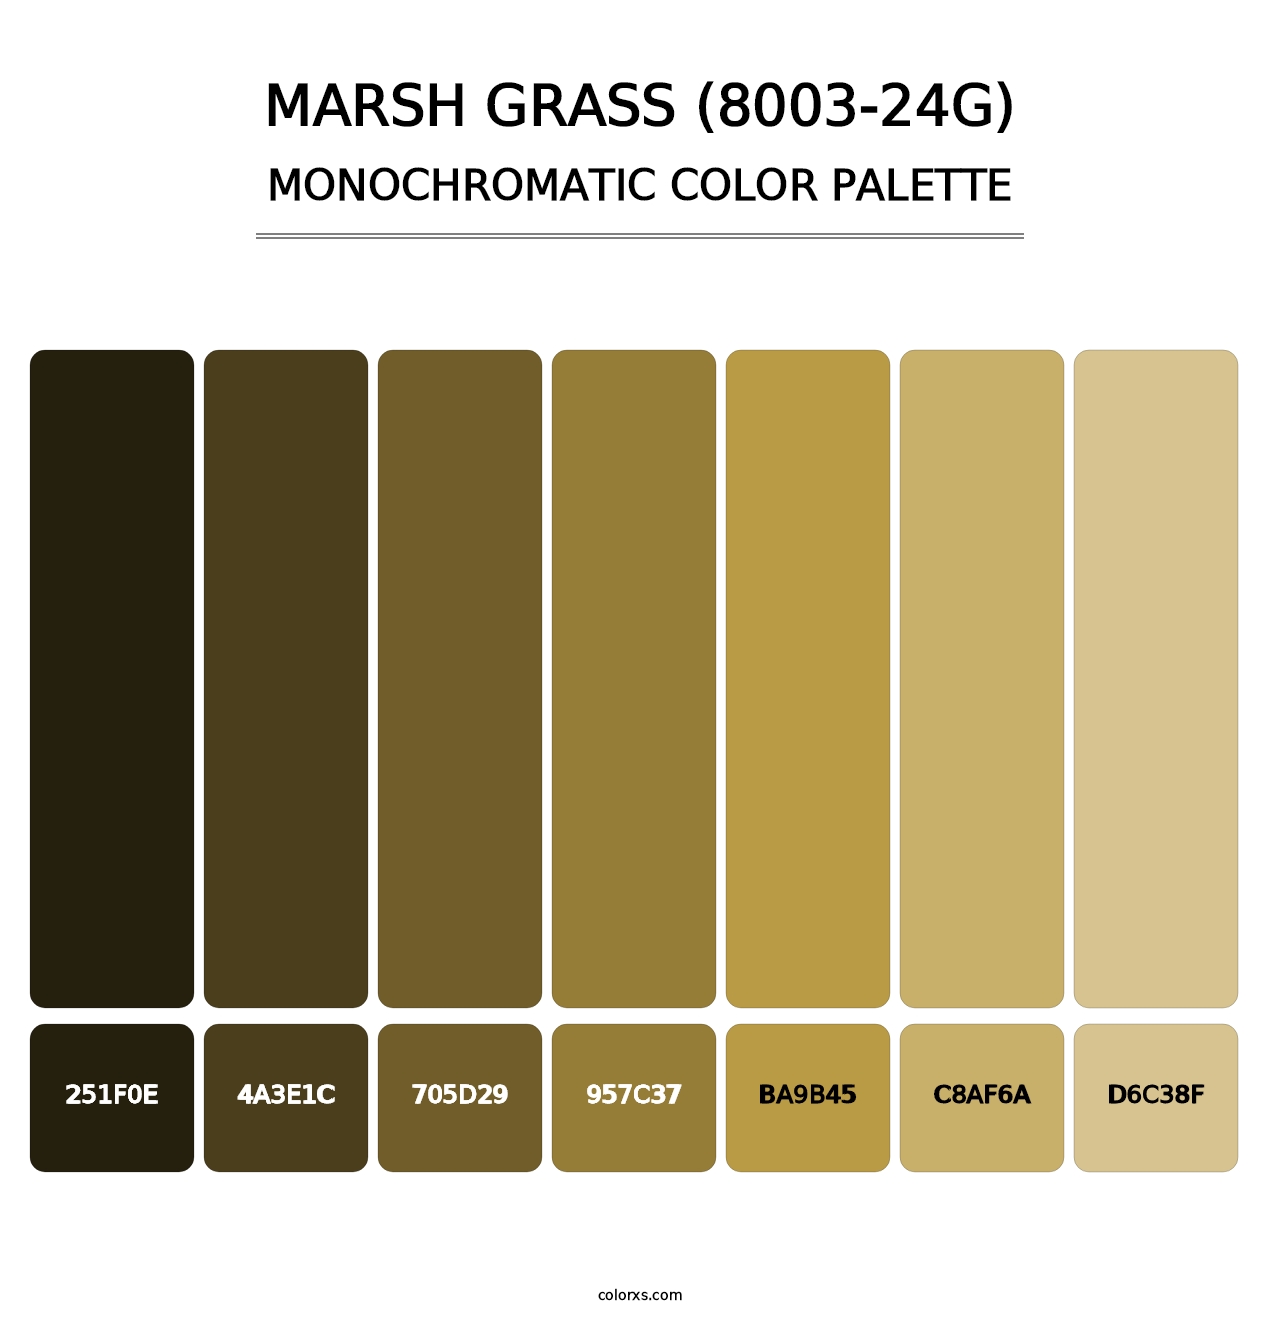 Marsh Grass (8003-24G) - Monochromatic Color Palette